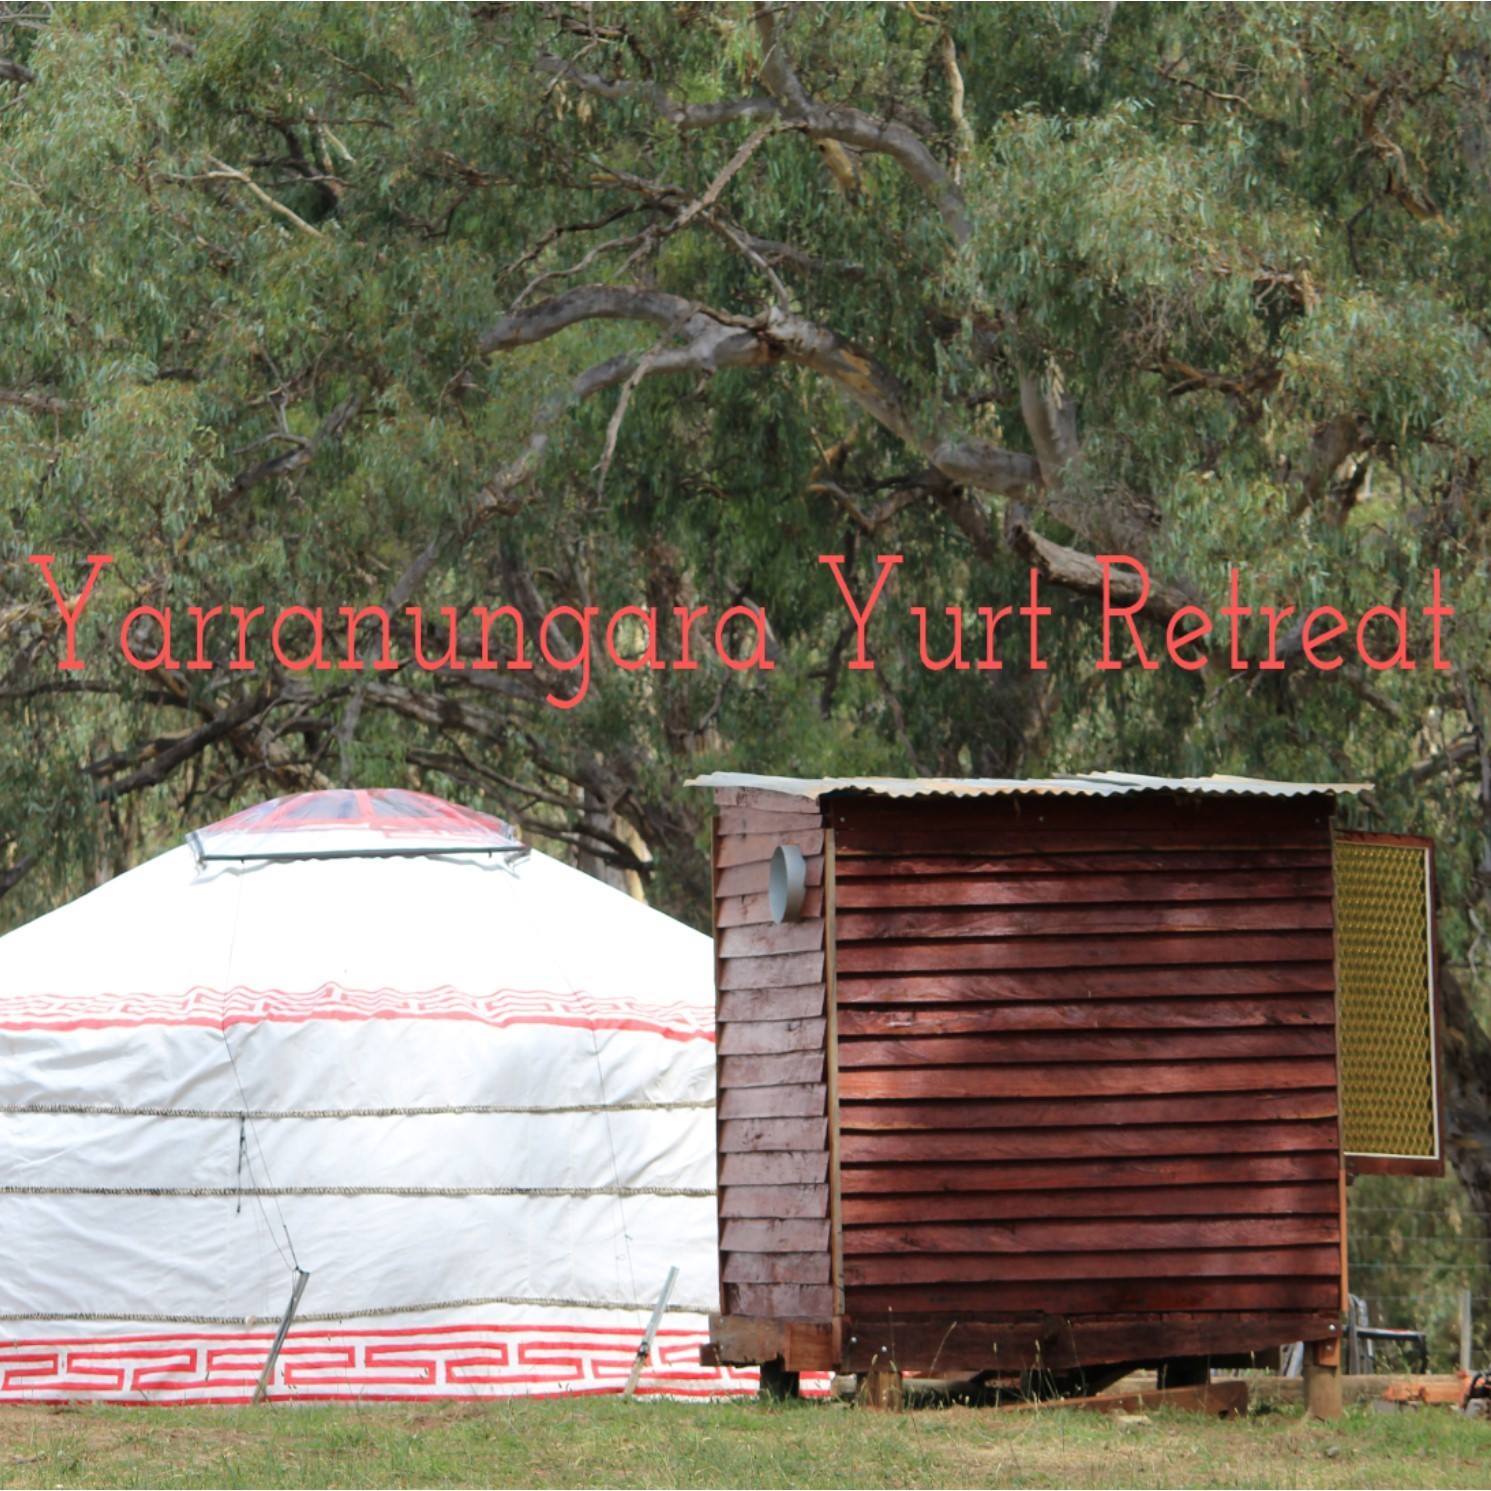 Yarranungara Yurt Retreat